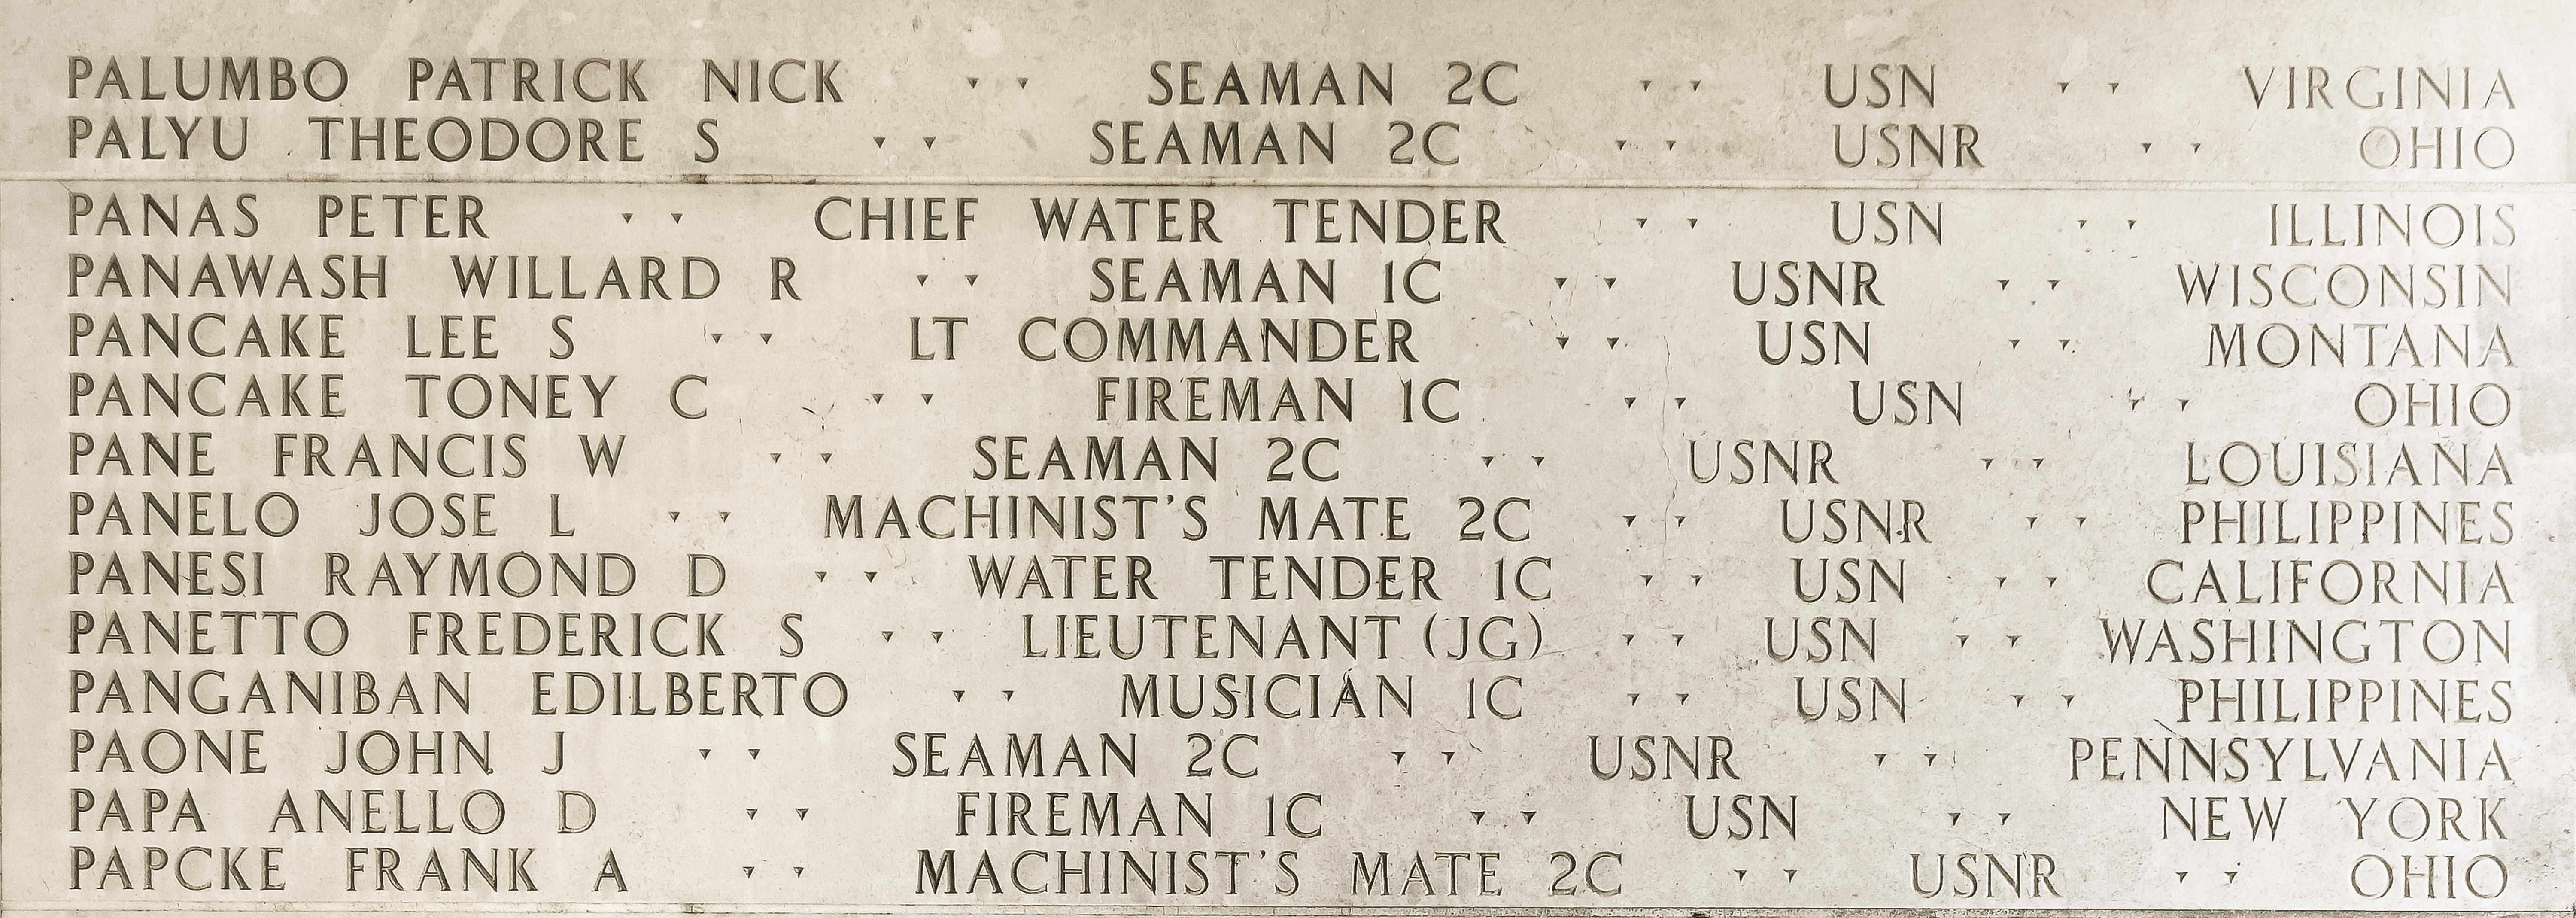 John J. Paone, Seaman Second Class